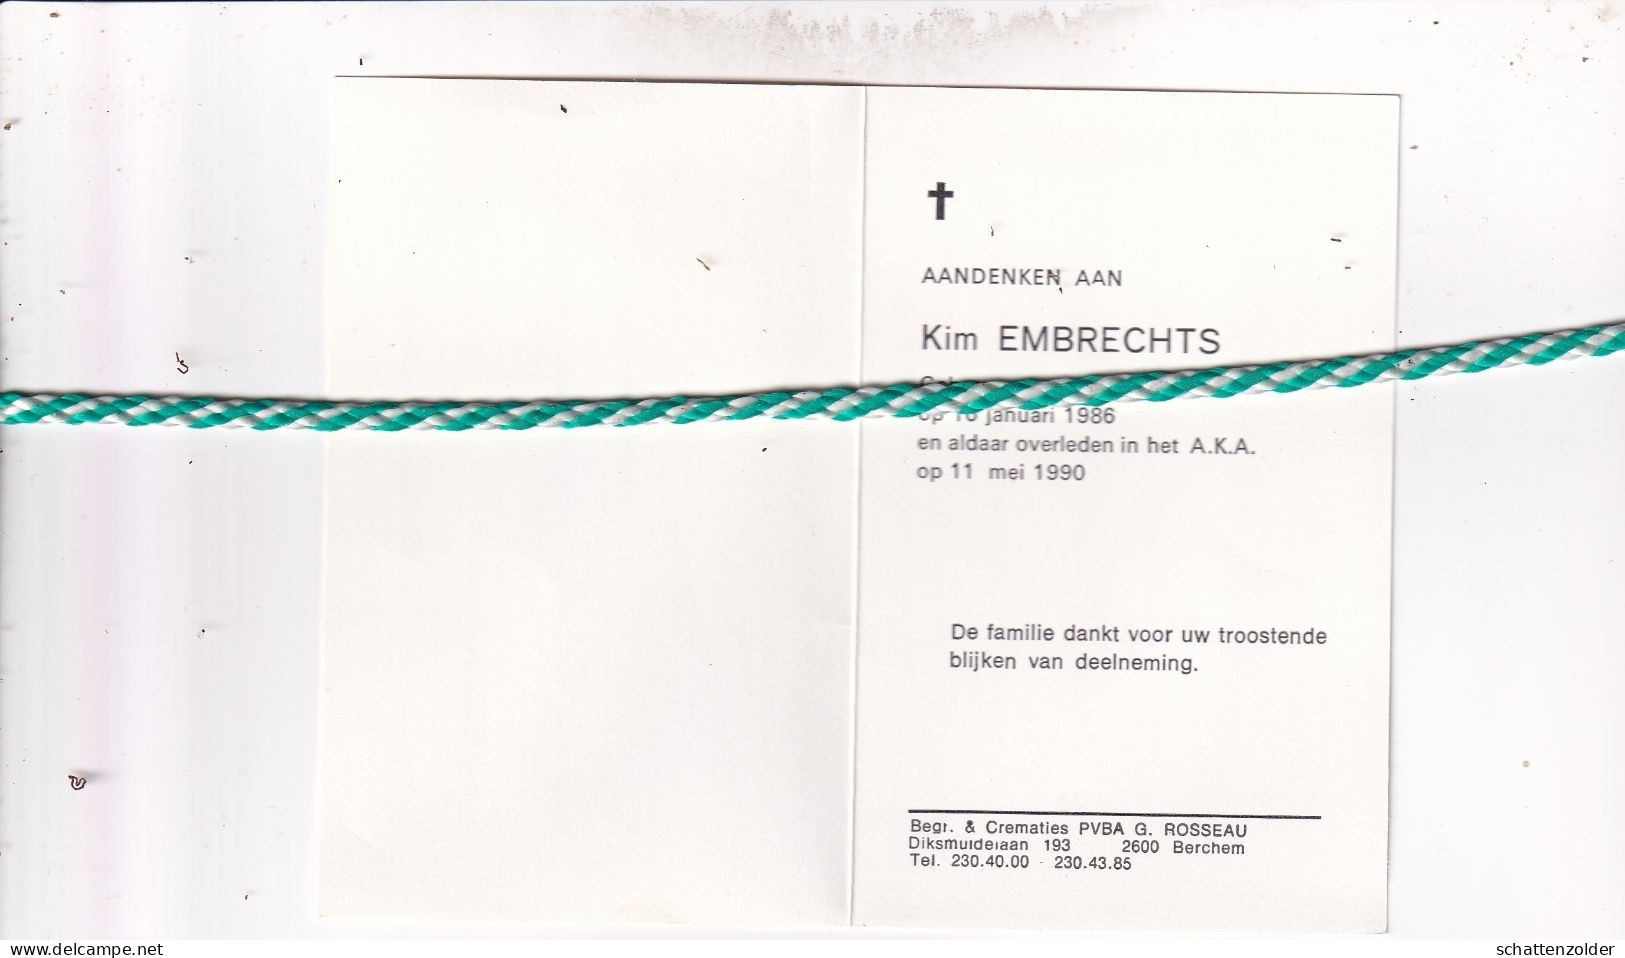 Kim Embrechts, Antwerpen 1986, 1990 - Todesanzeige